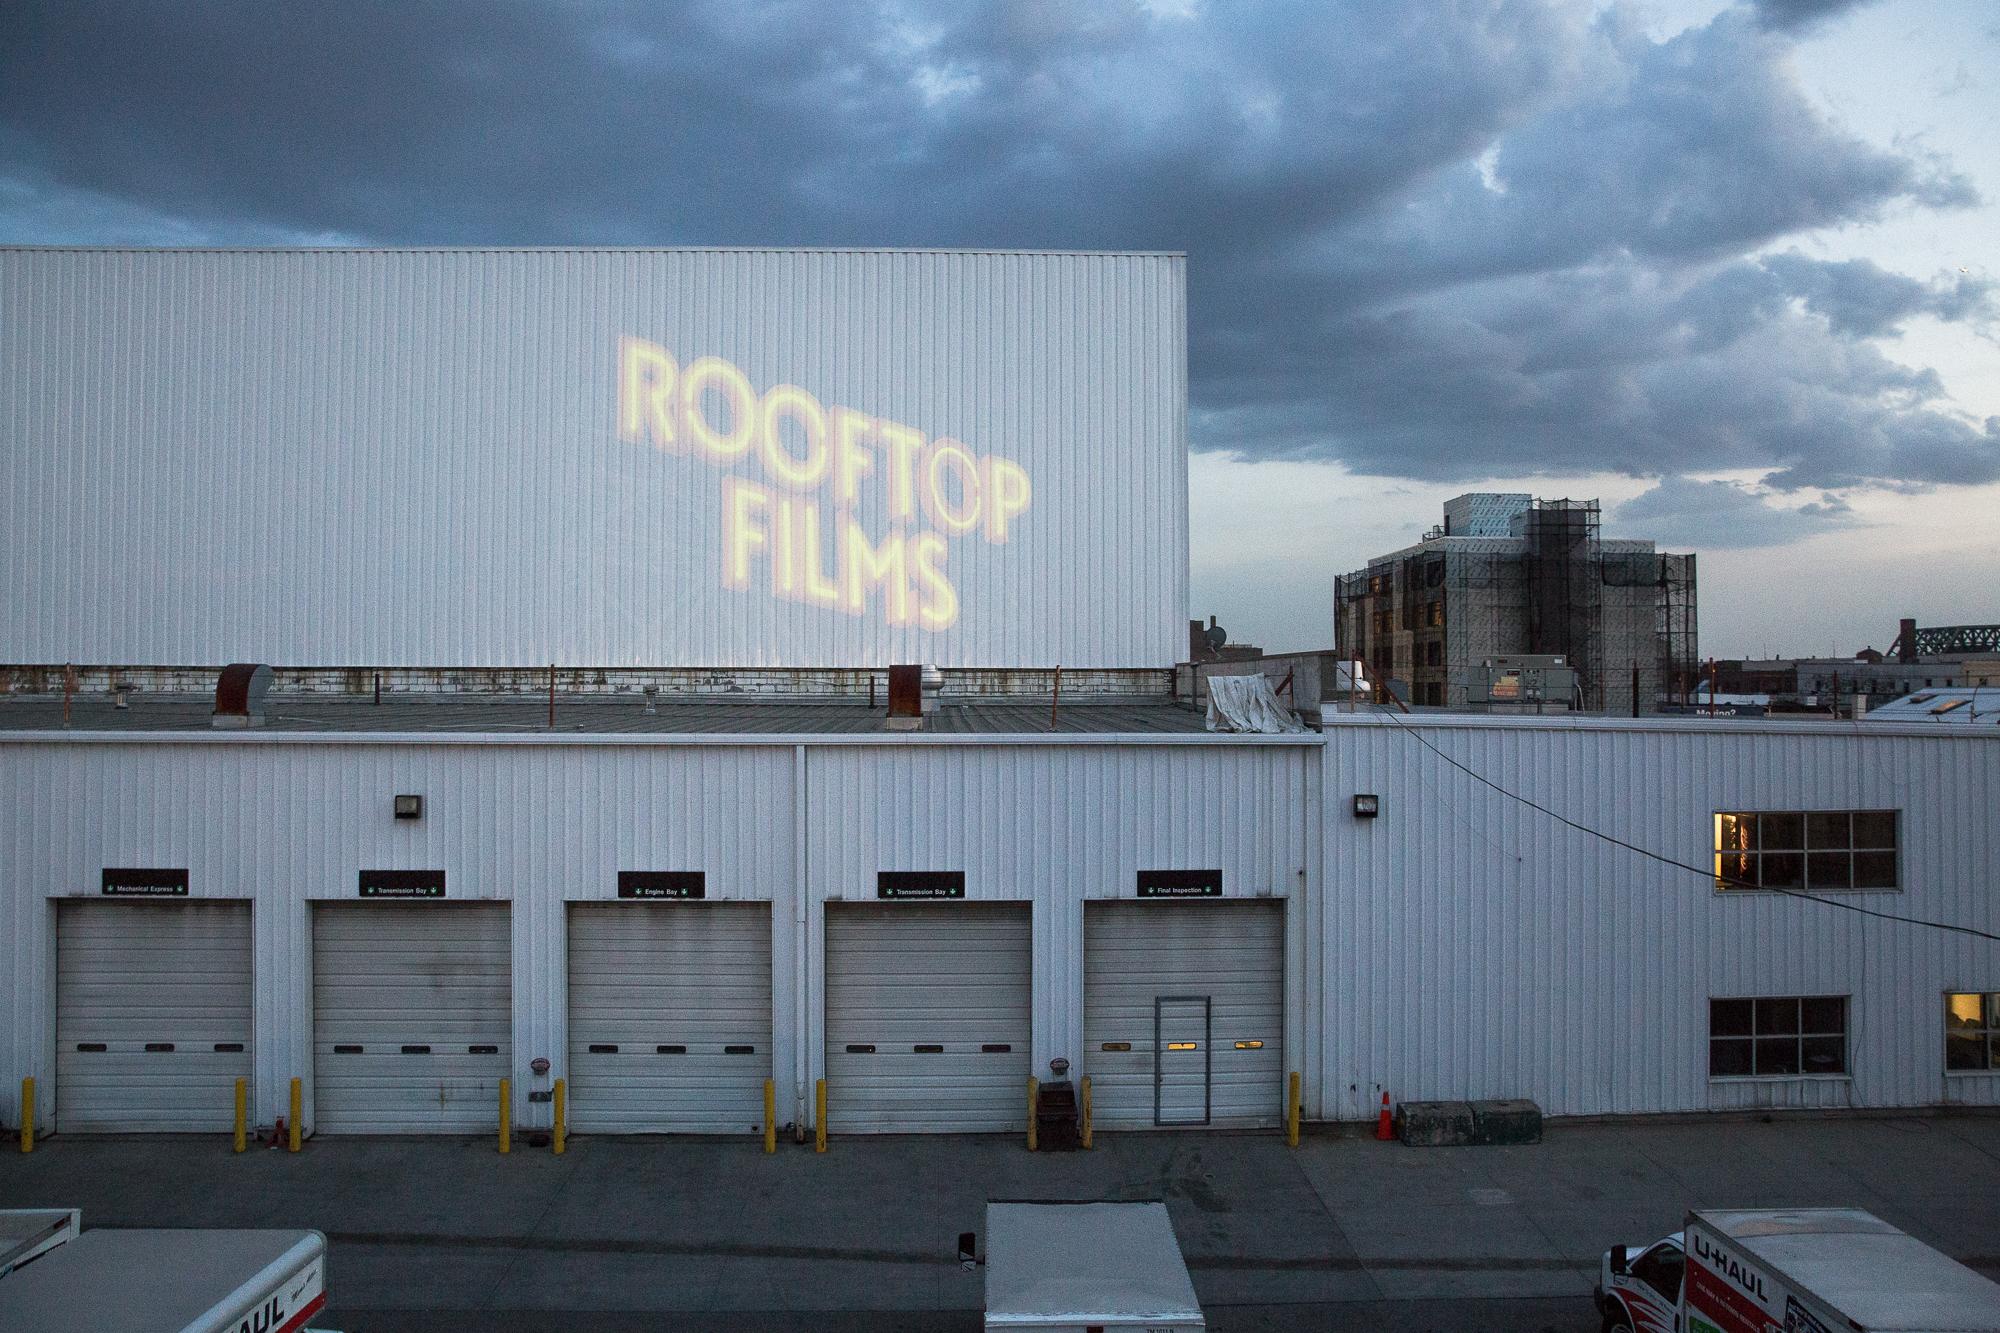 Rooftop Films - 